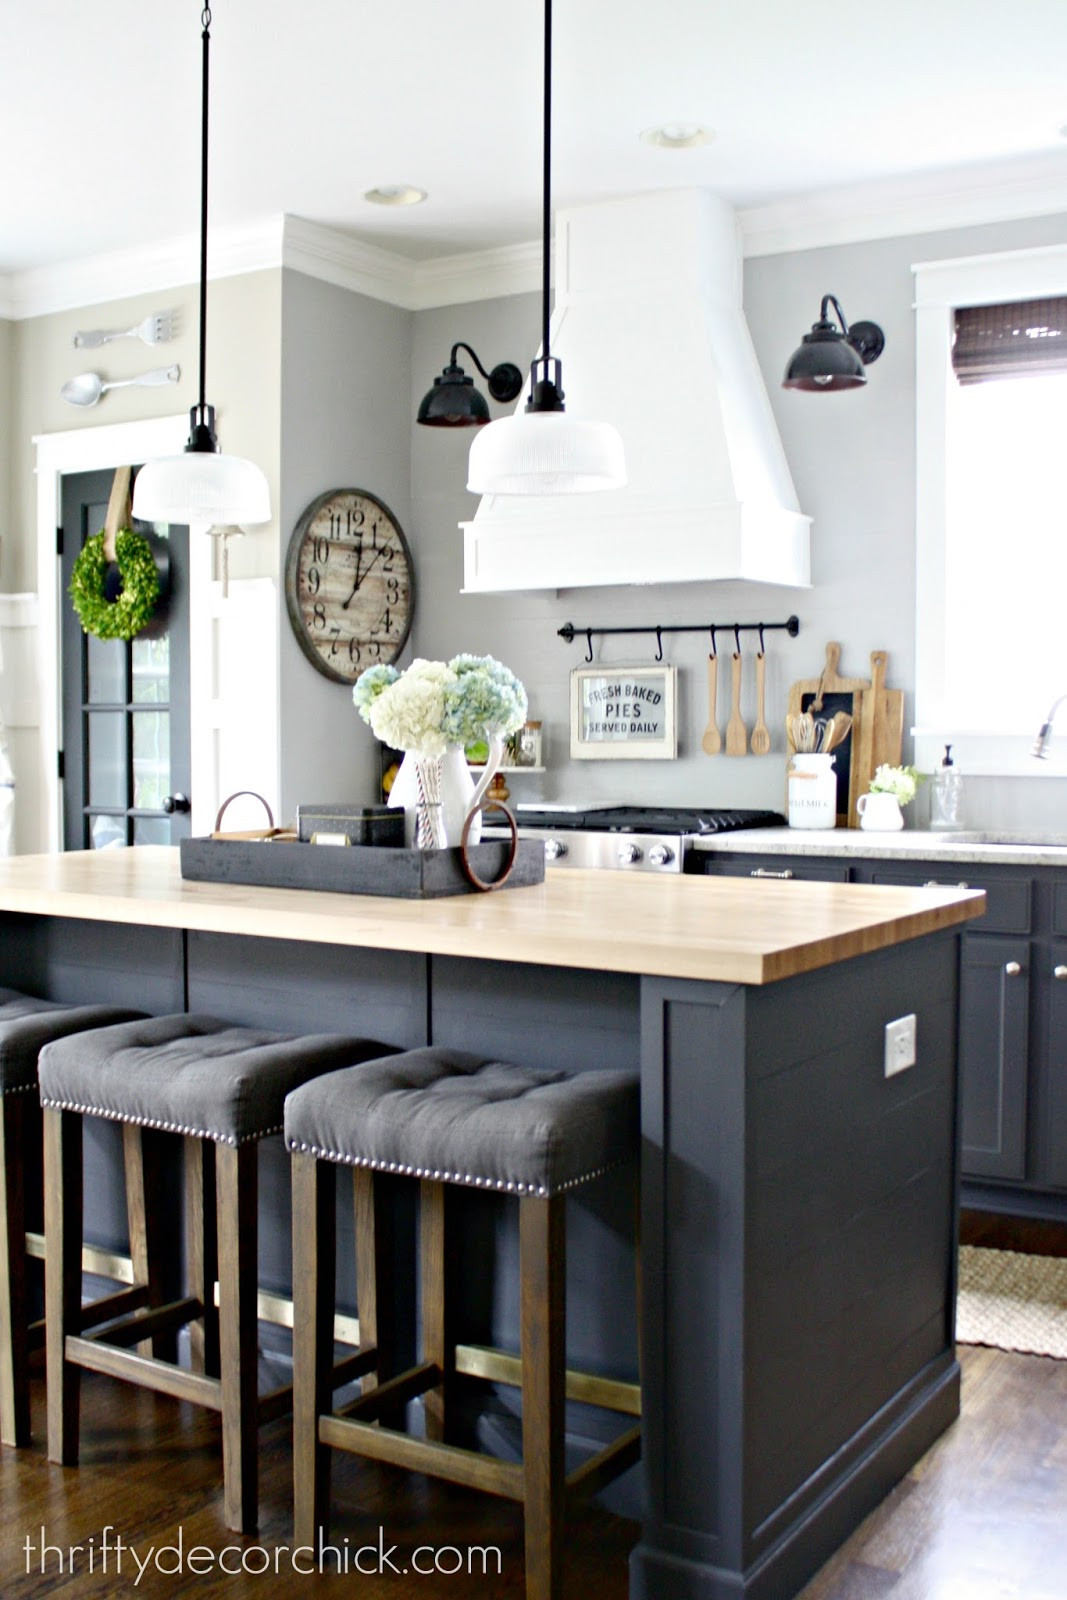 DIY Kitchen Decor
 A DIY kitchen renovation update nine months later from